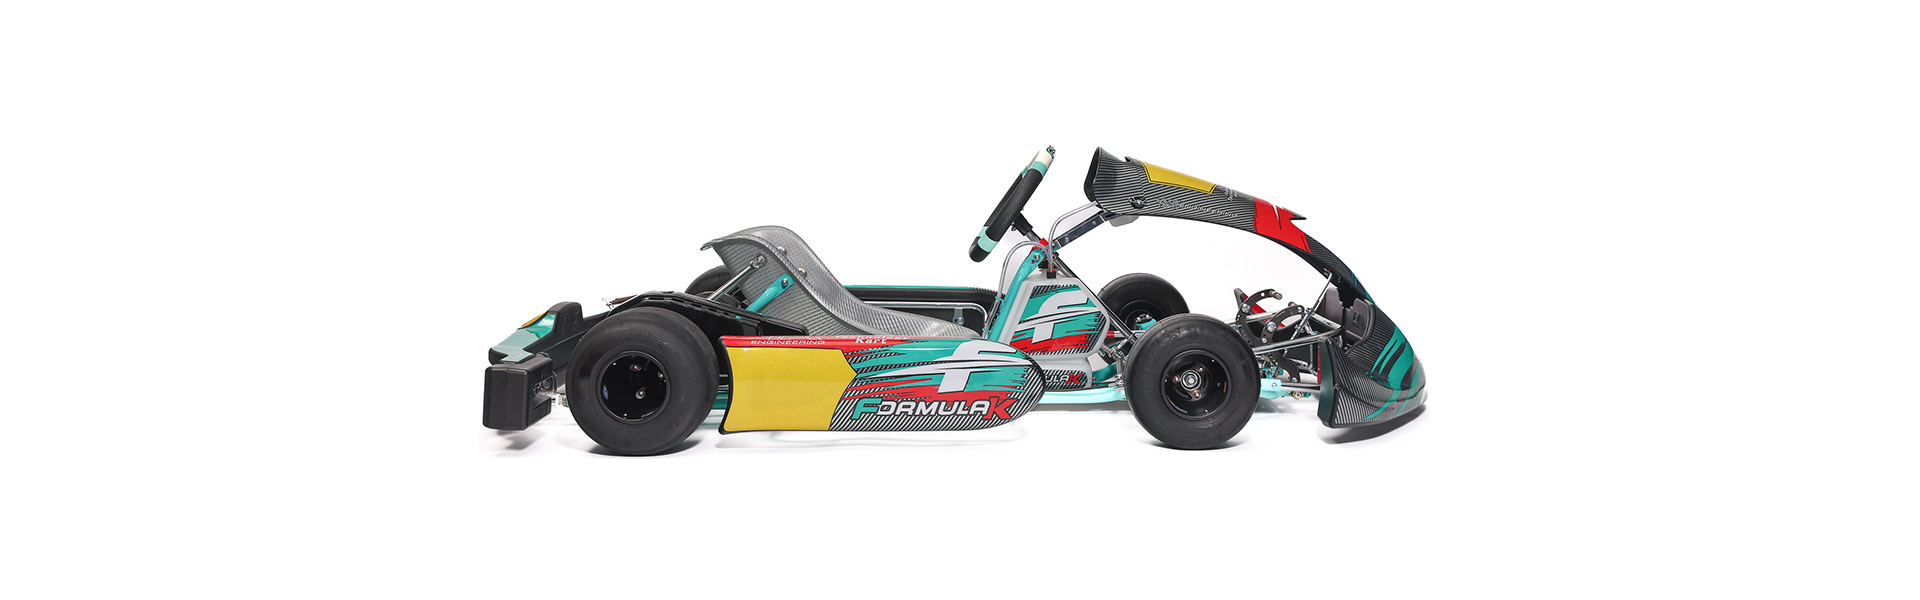 Formula K | IPKarting presents the new Formula K chassis